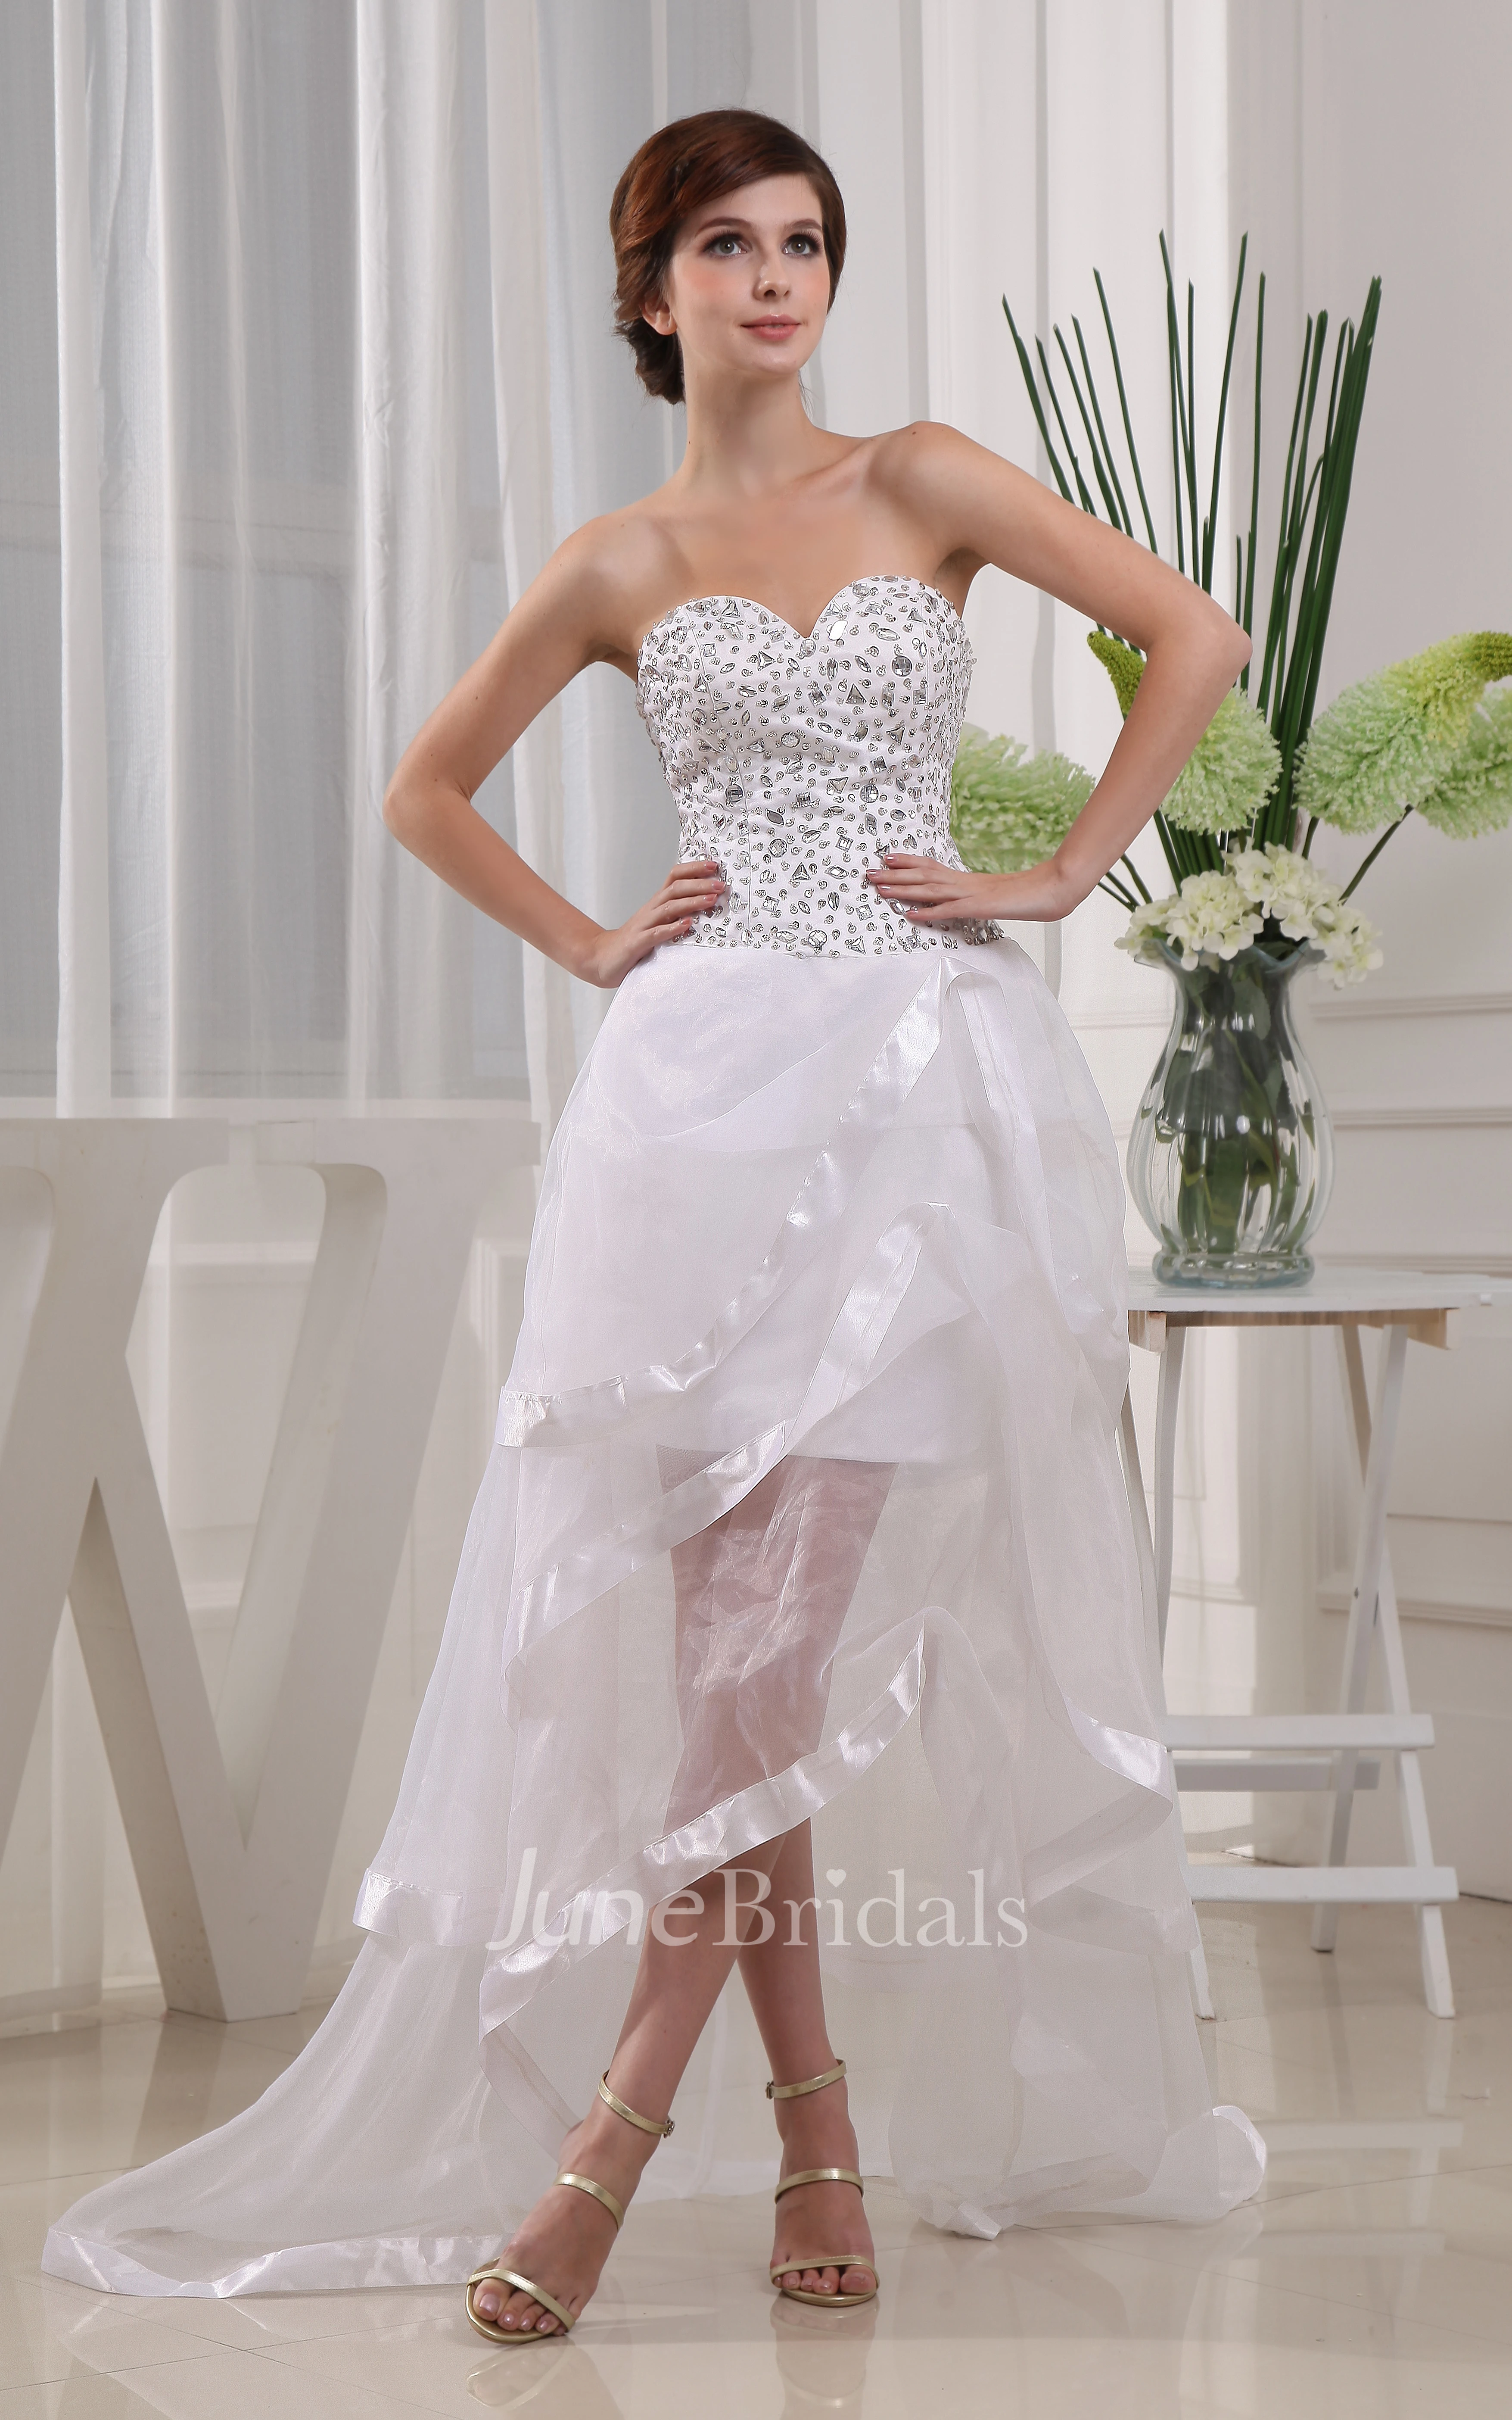 Year 6 Formal Dresses - June Bridals